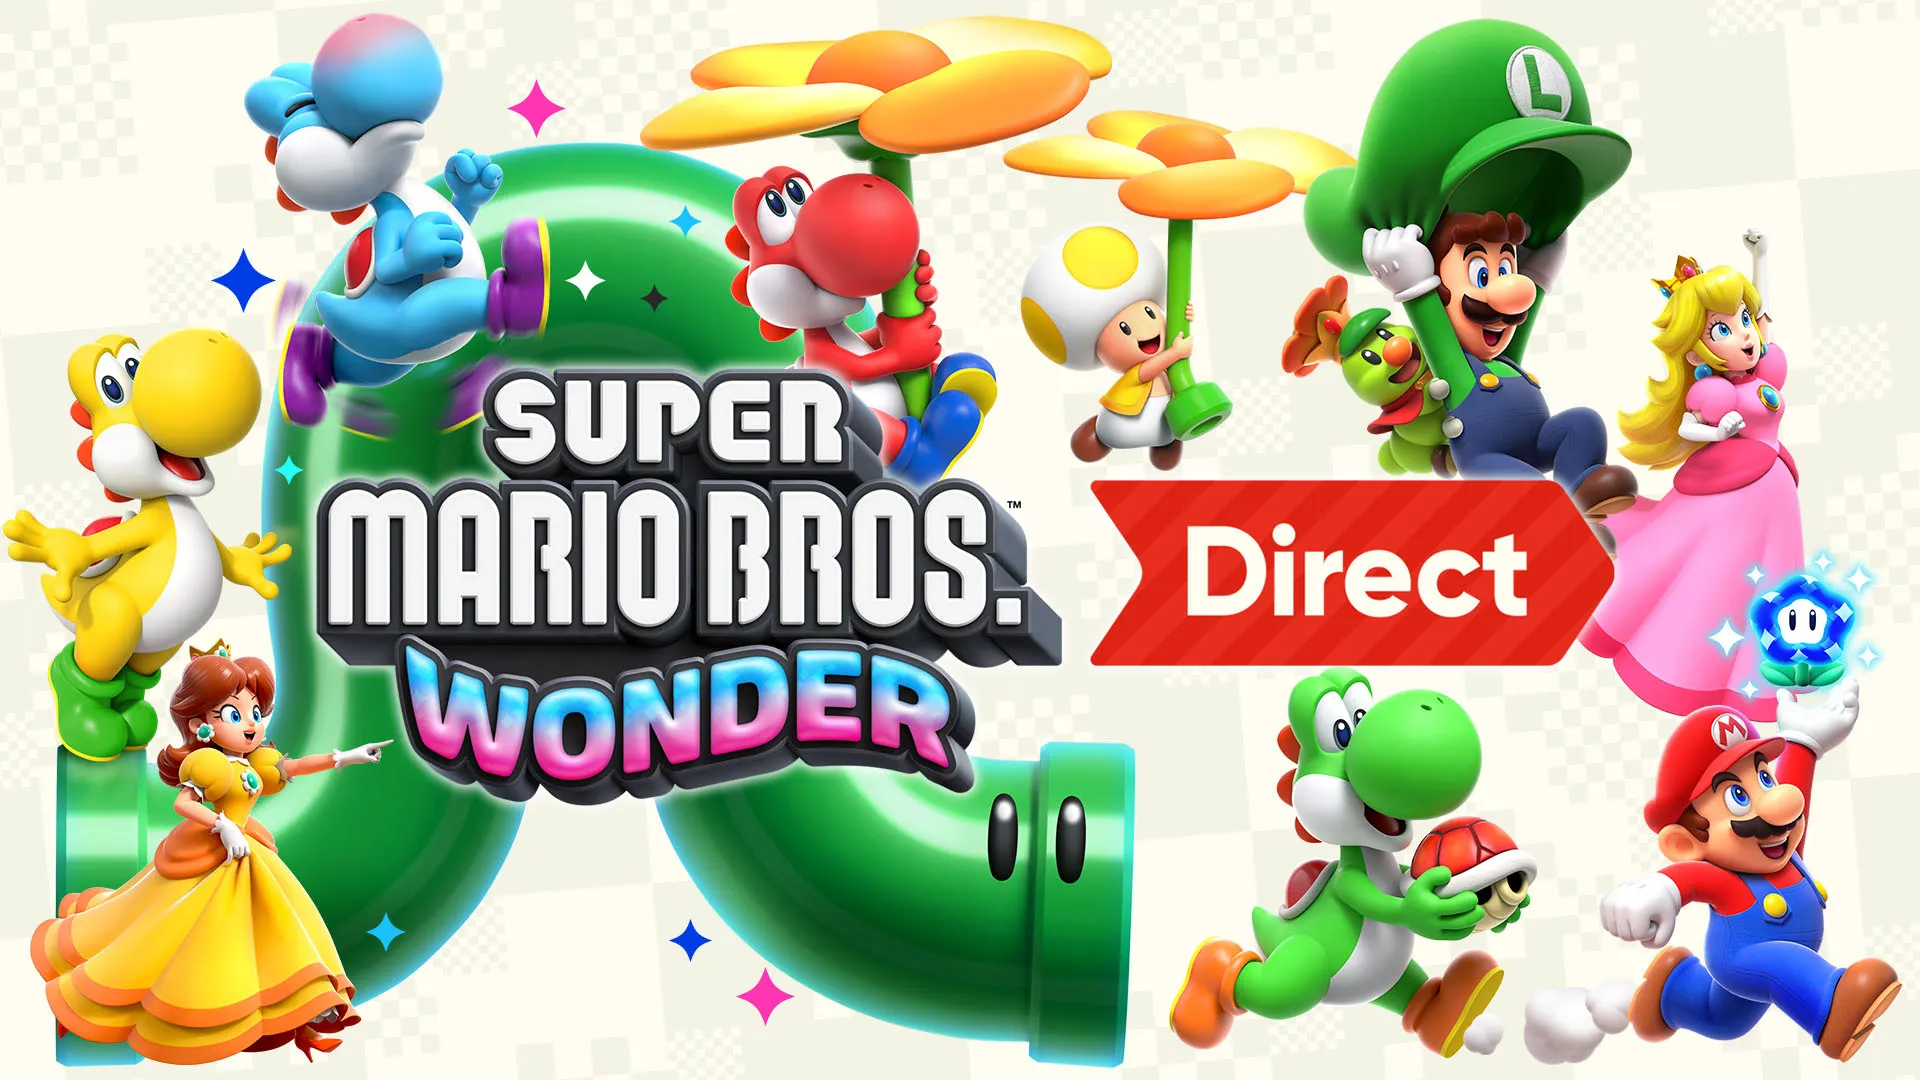 Super Mario Bros Wonder Direct Airs This Week